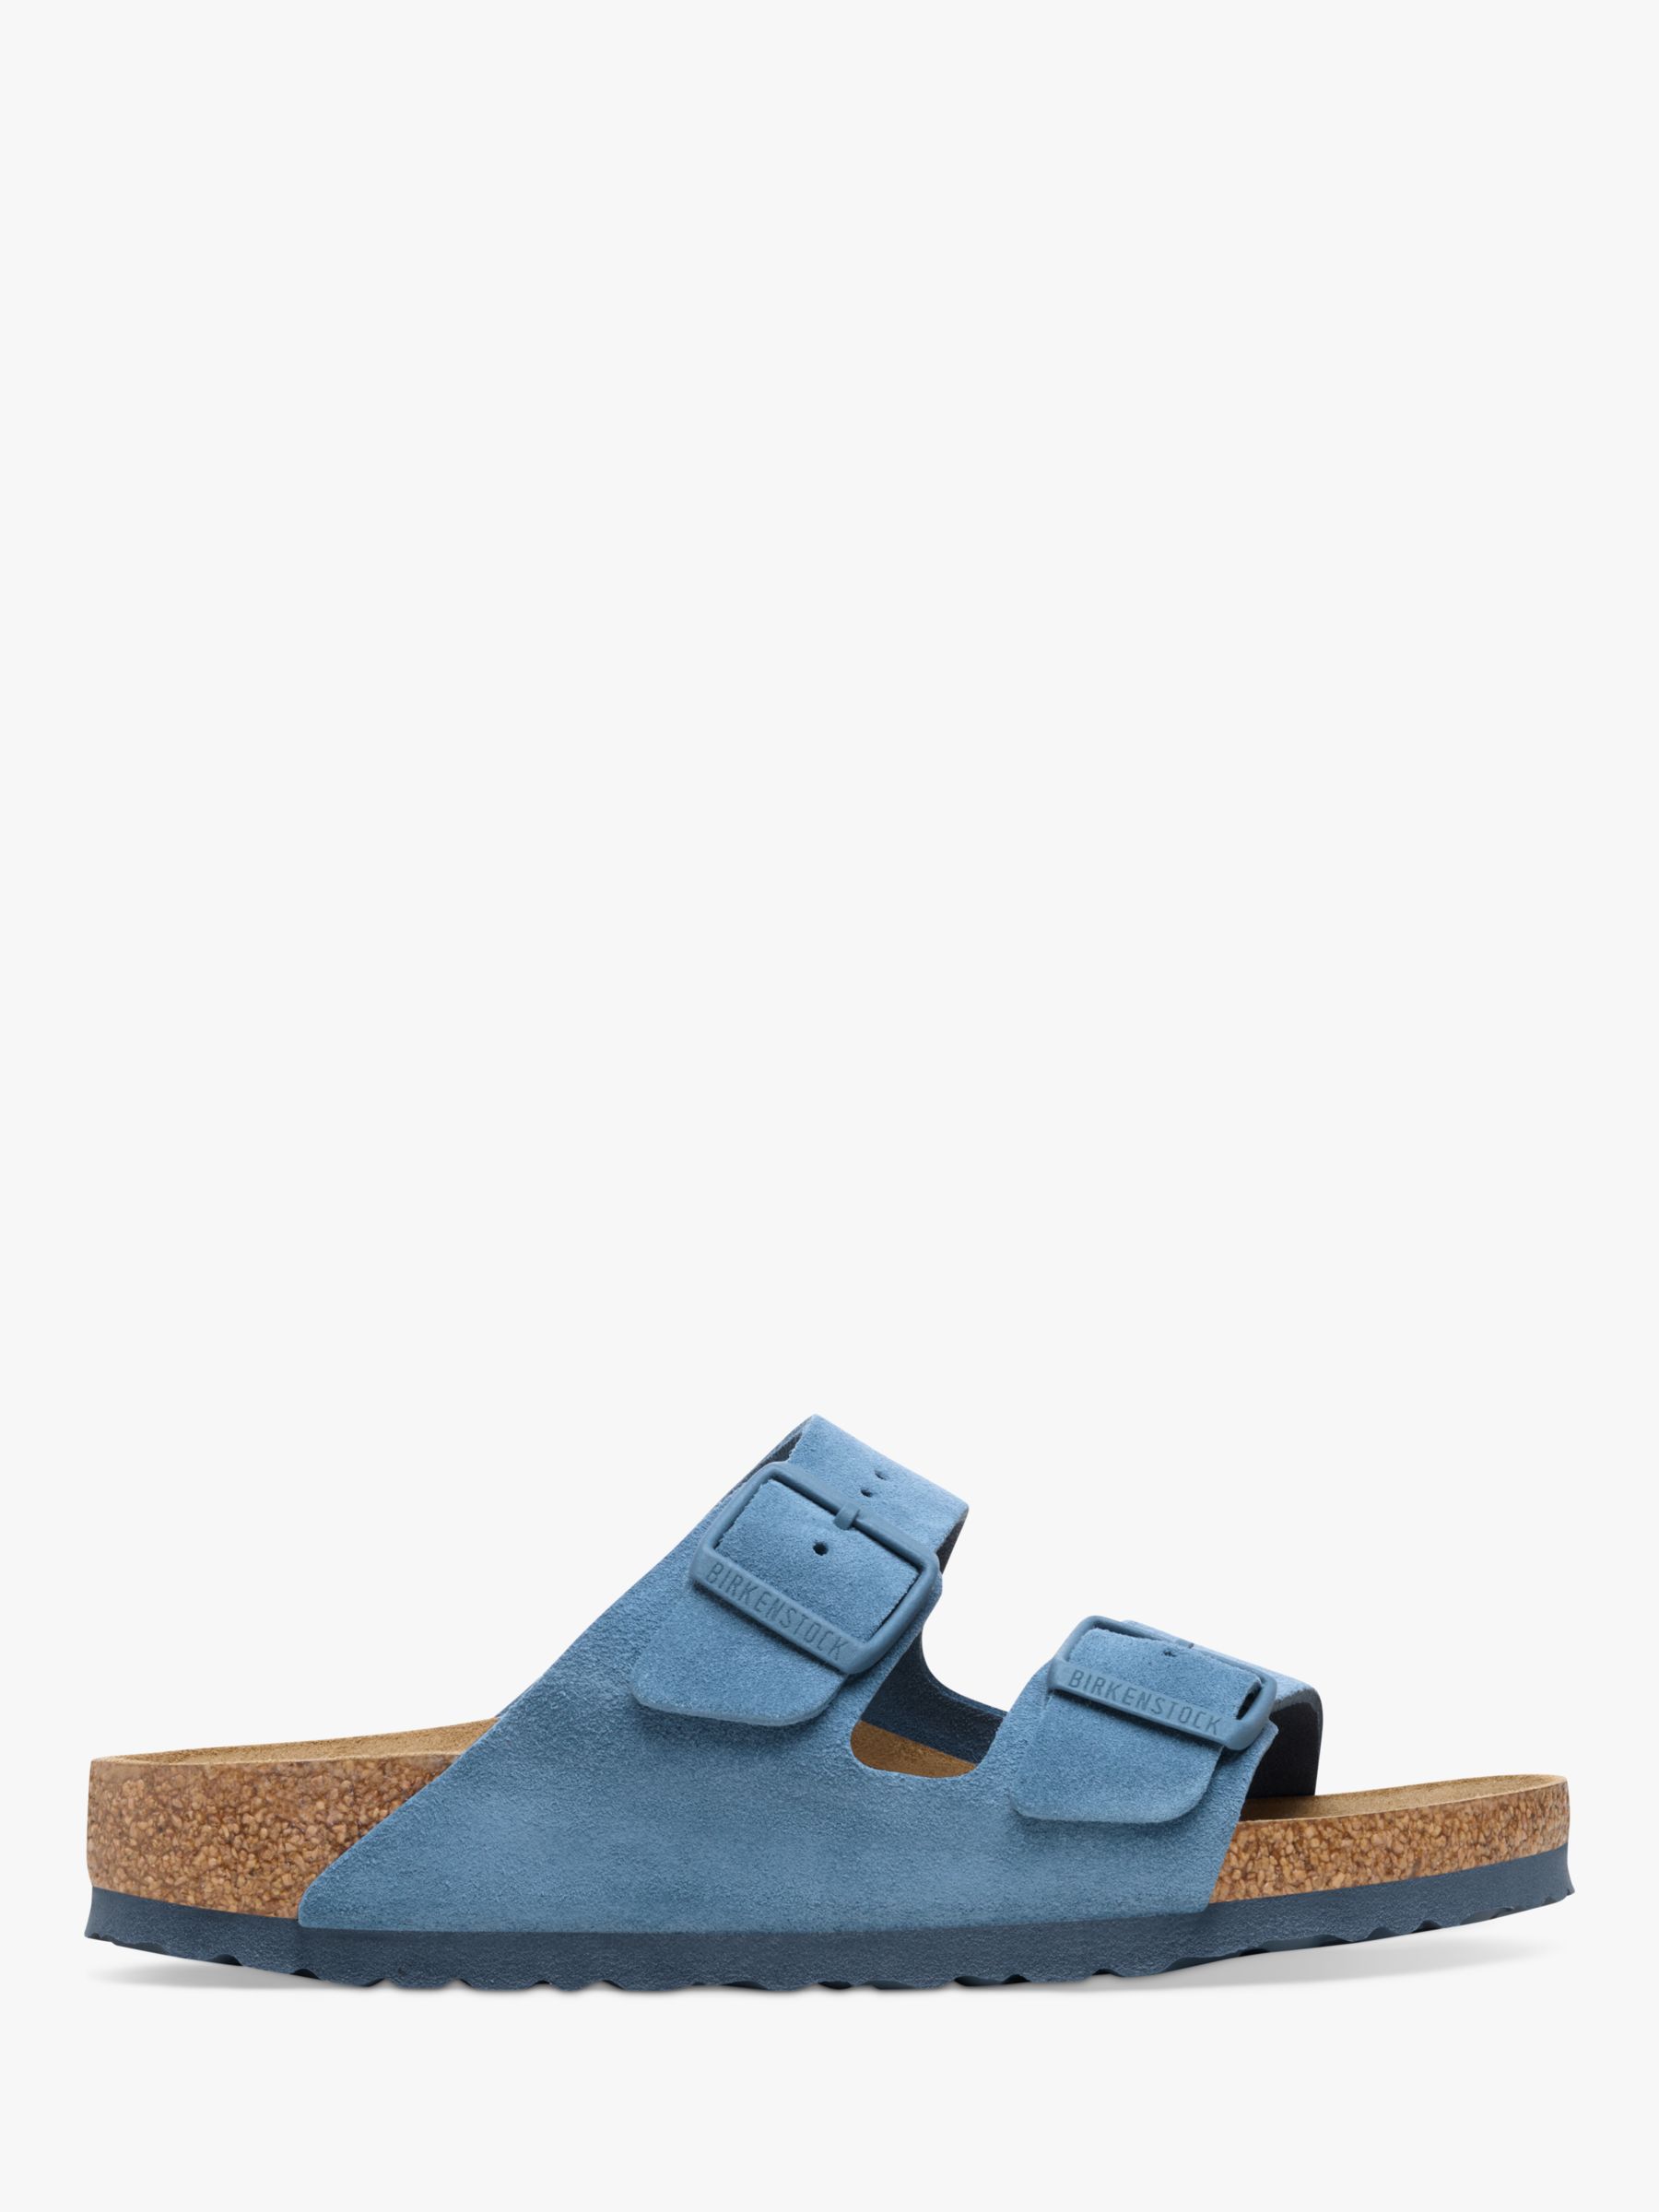 Birkenstock Arizona Suede Sandals, Elemental Blue